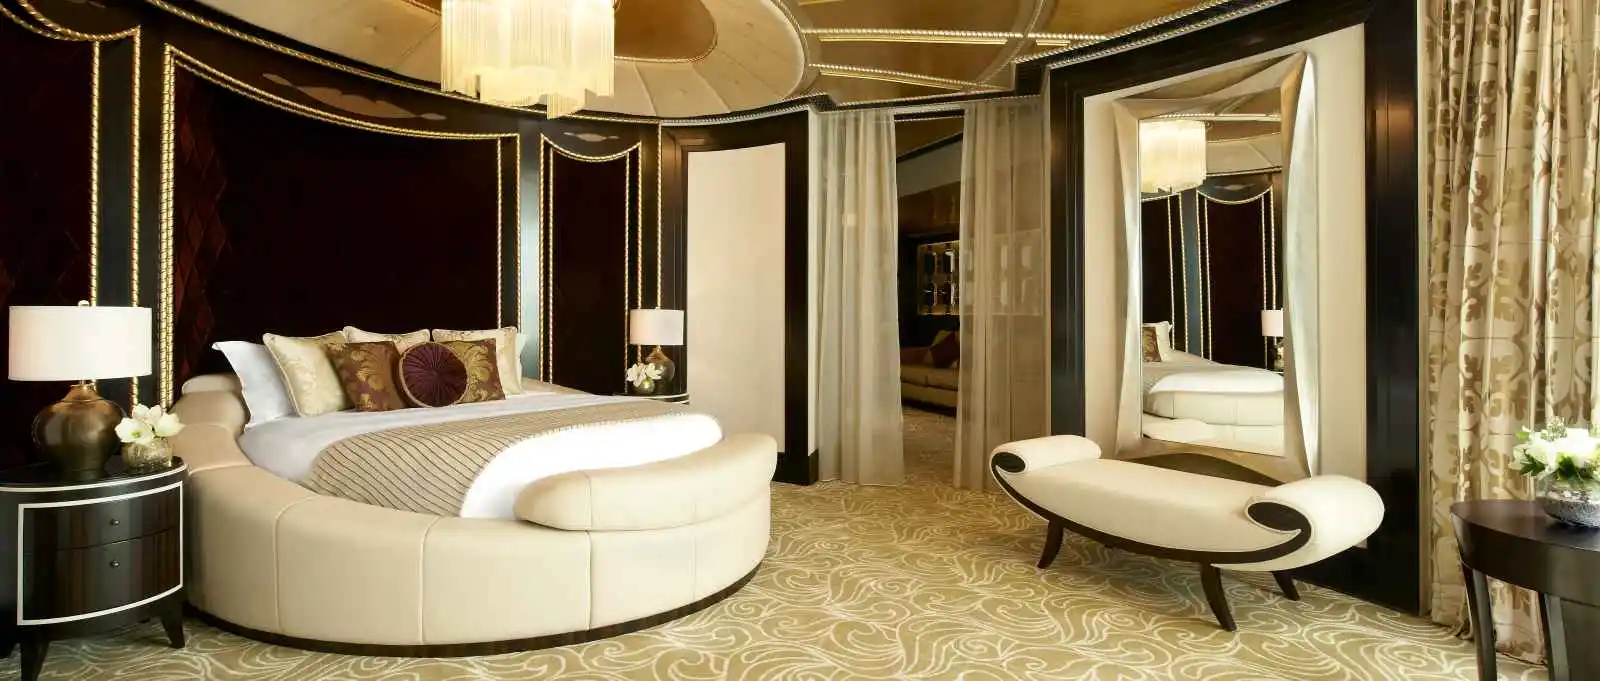 Abu Dhabi Master Suite, The St. Regis, Abou Dhabi